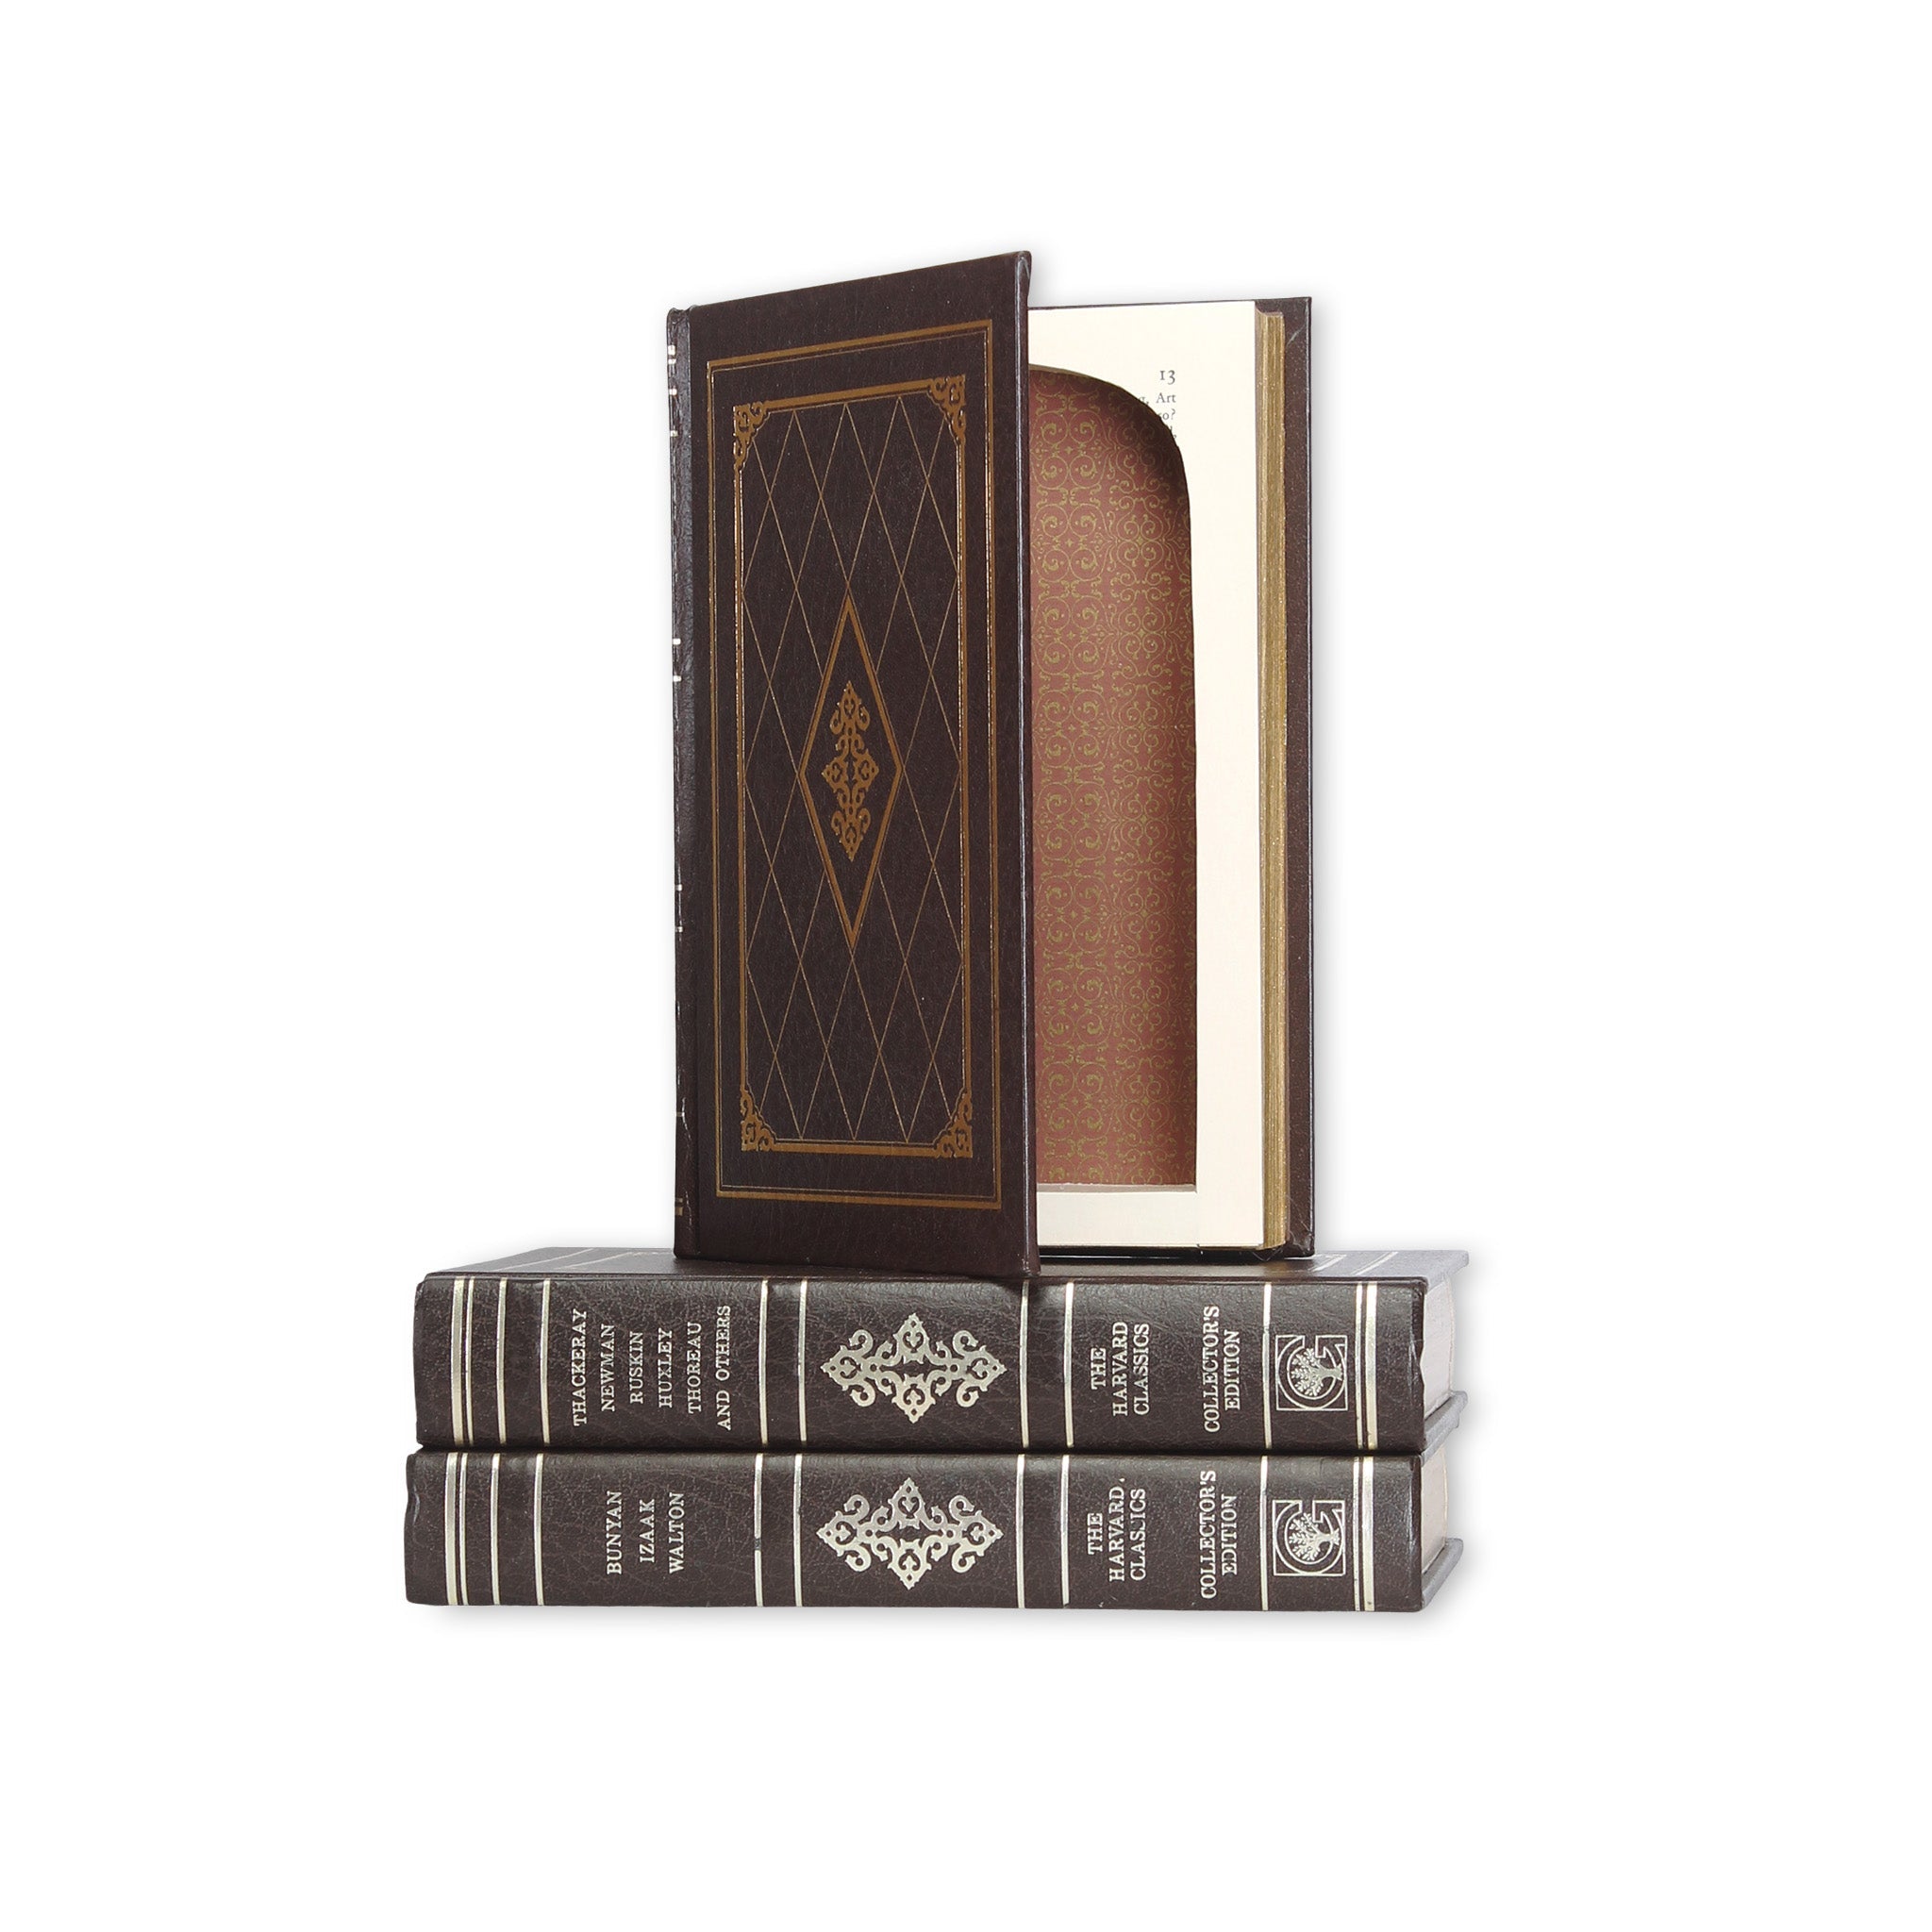 Harvard Classics Collector's Edition - You pick the title - Secret Storage Books